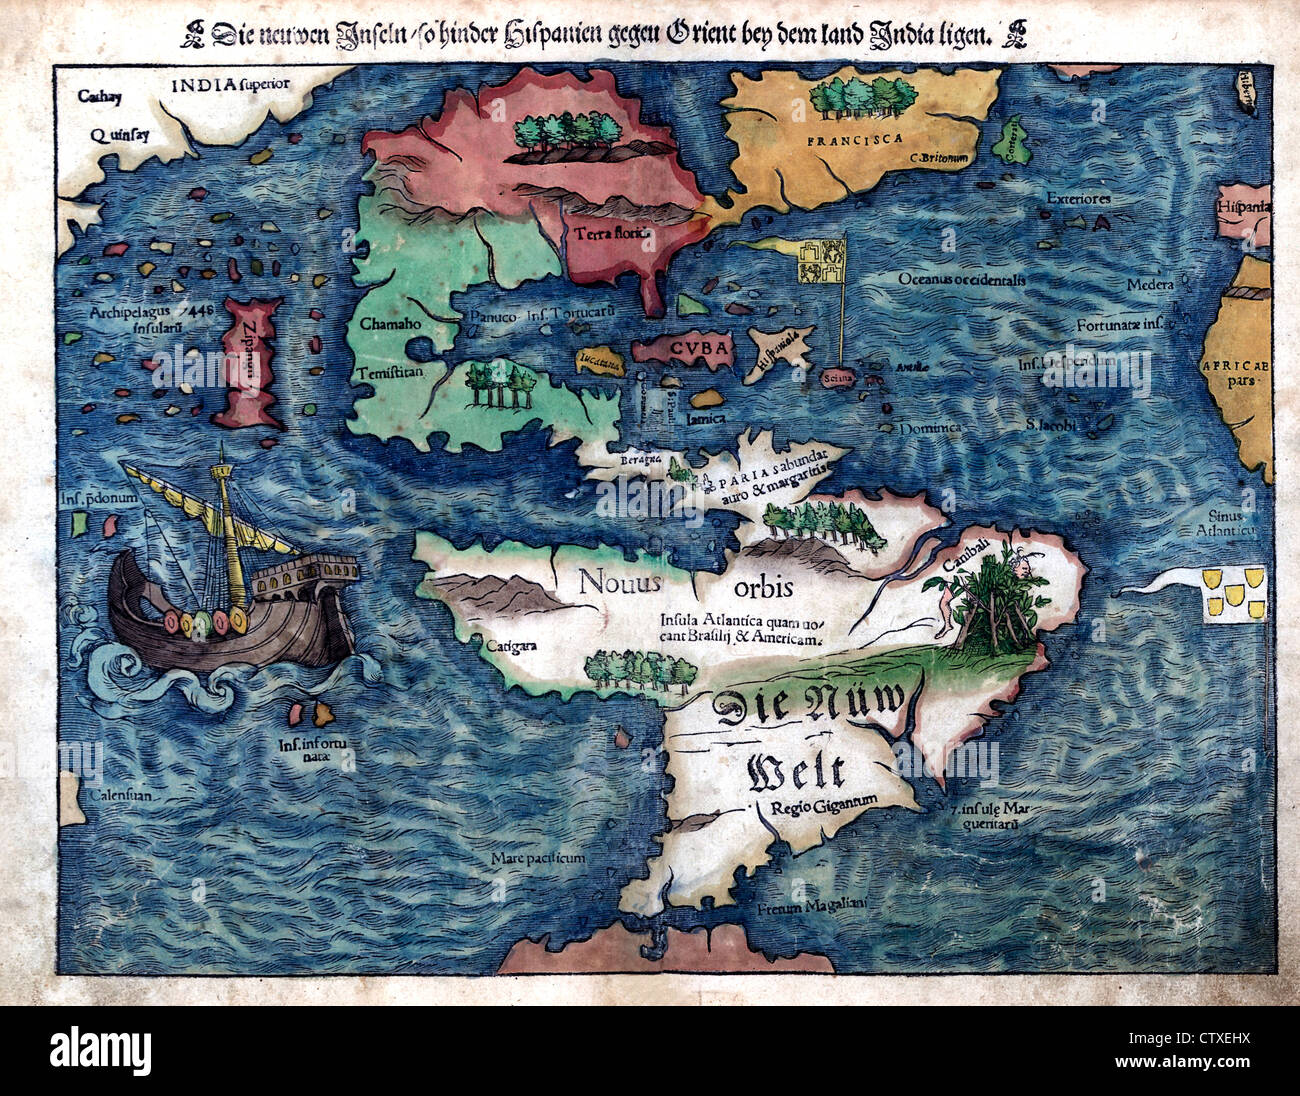 Mappa del Mondo Nuovo, circa 1550 - Die neuen isole, in modo da ostacolare Hispanien gegen Orient bey dem paese India ligen Foto Stock